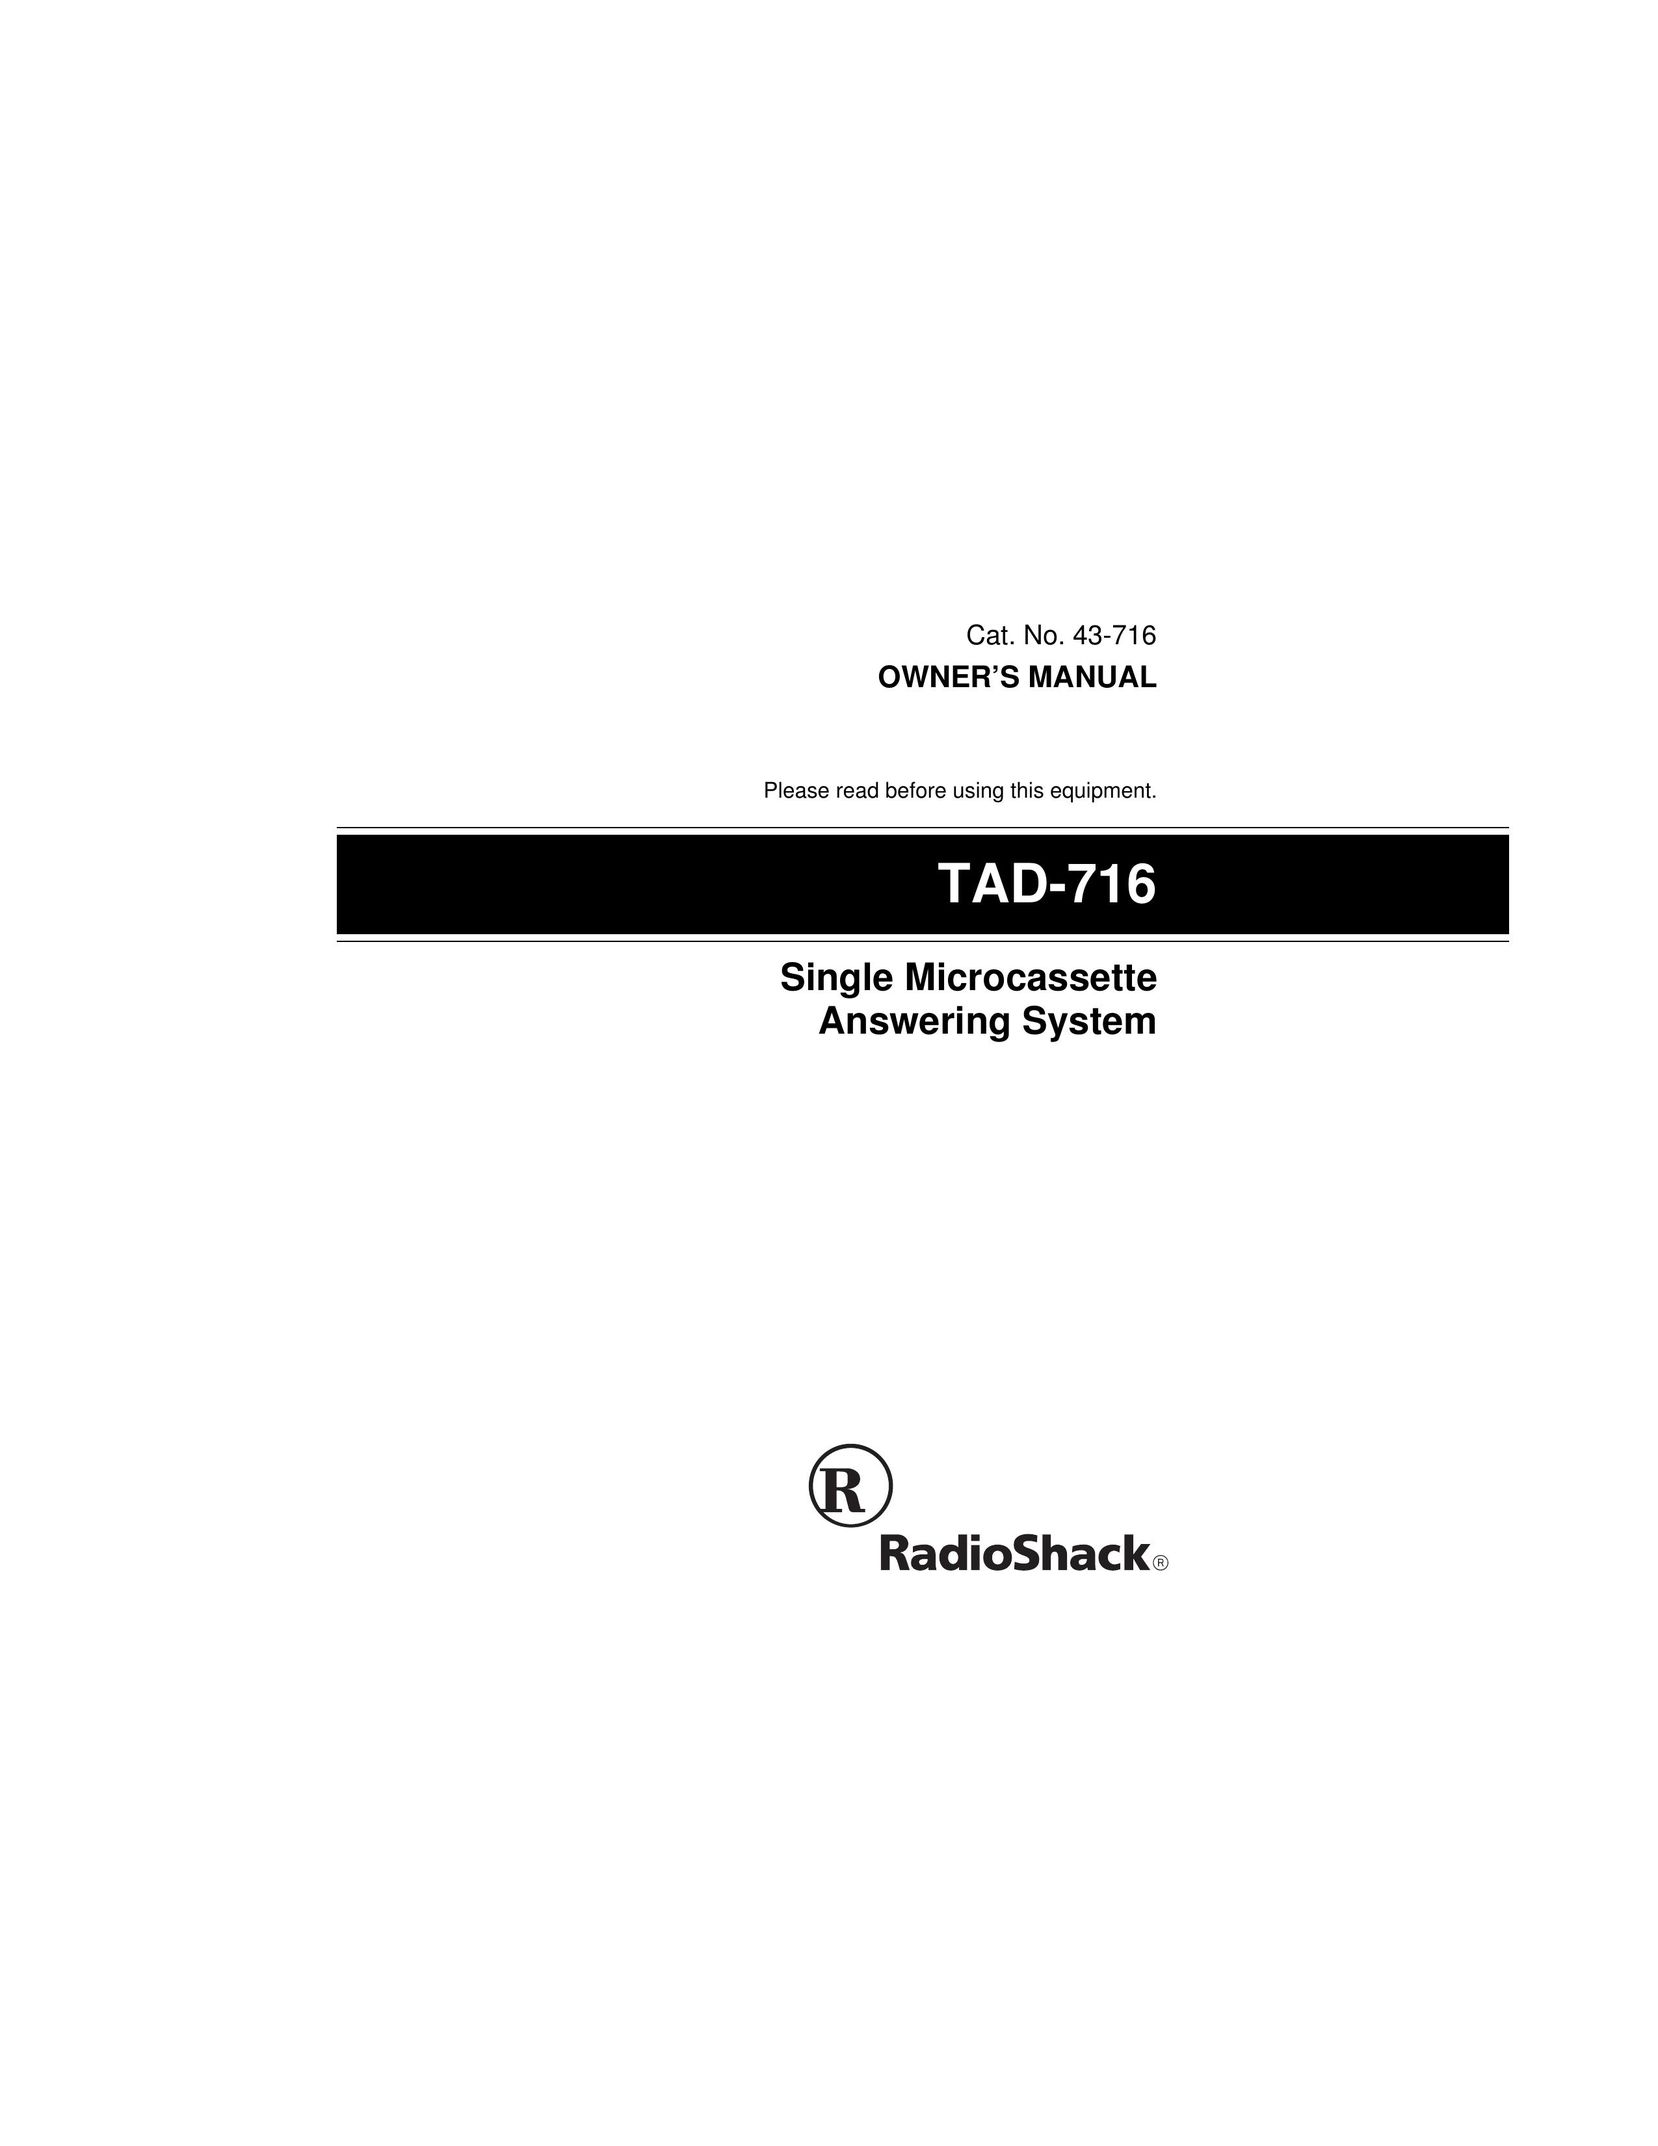 Radio Shack TAD-716 Answering Machine User Manual